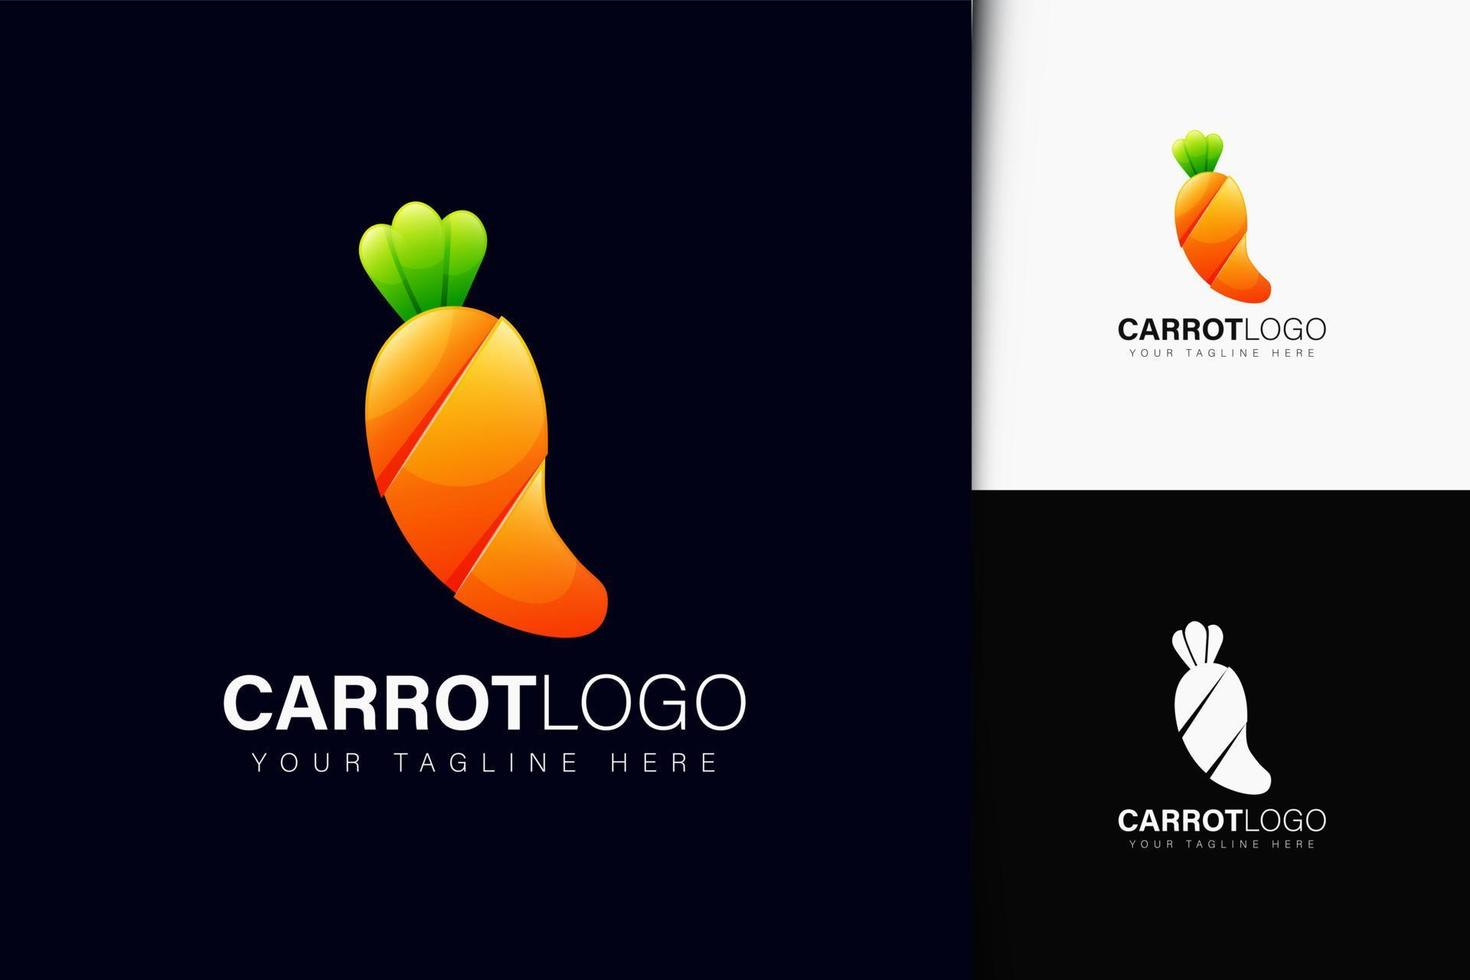 Carrot logo design with gradient vector